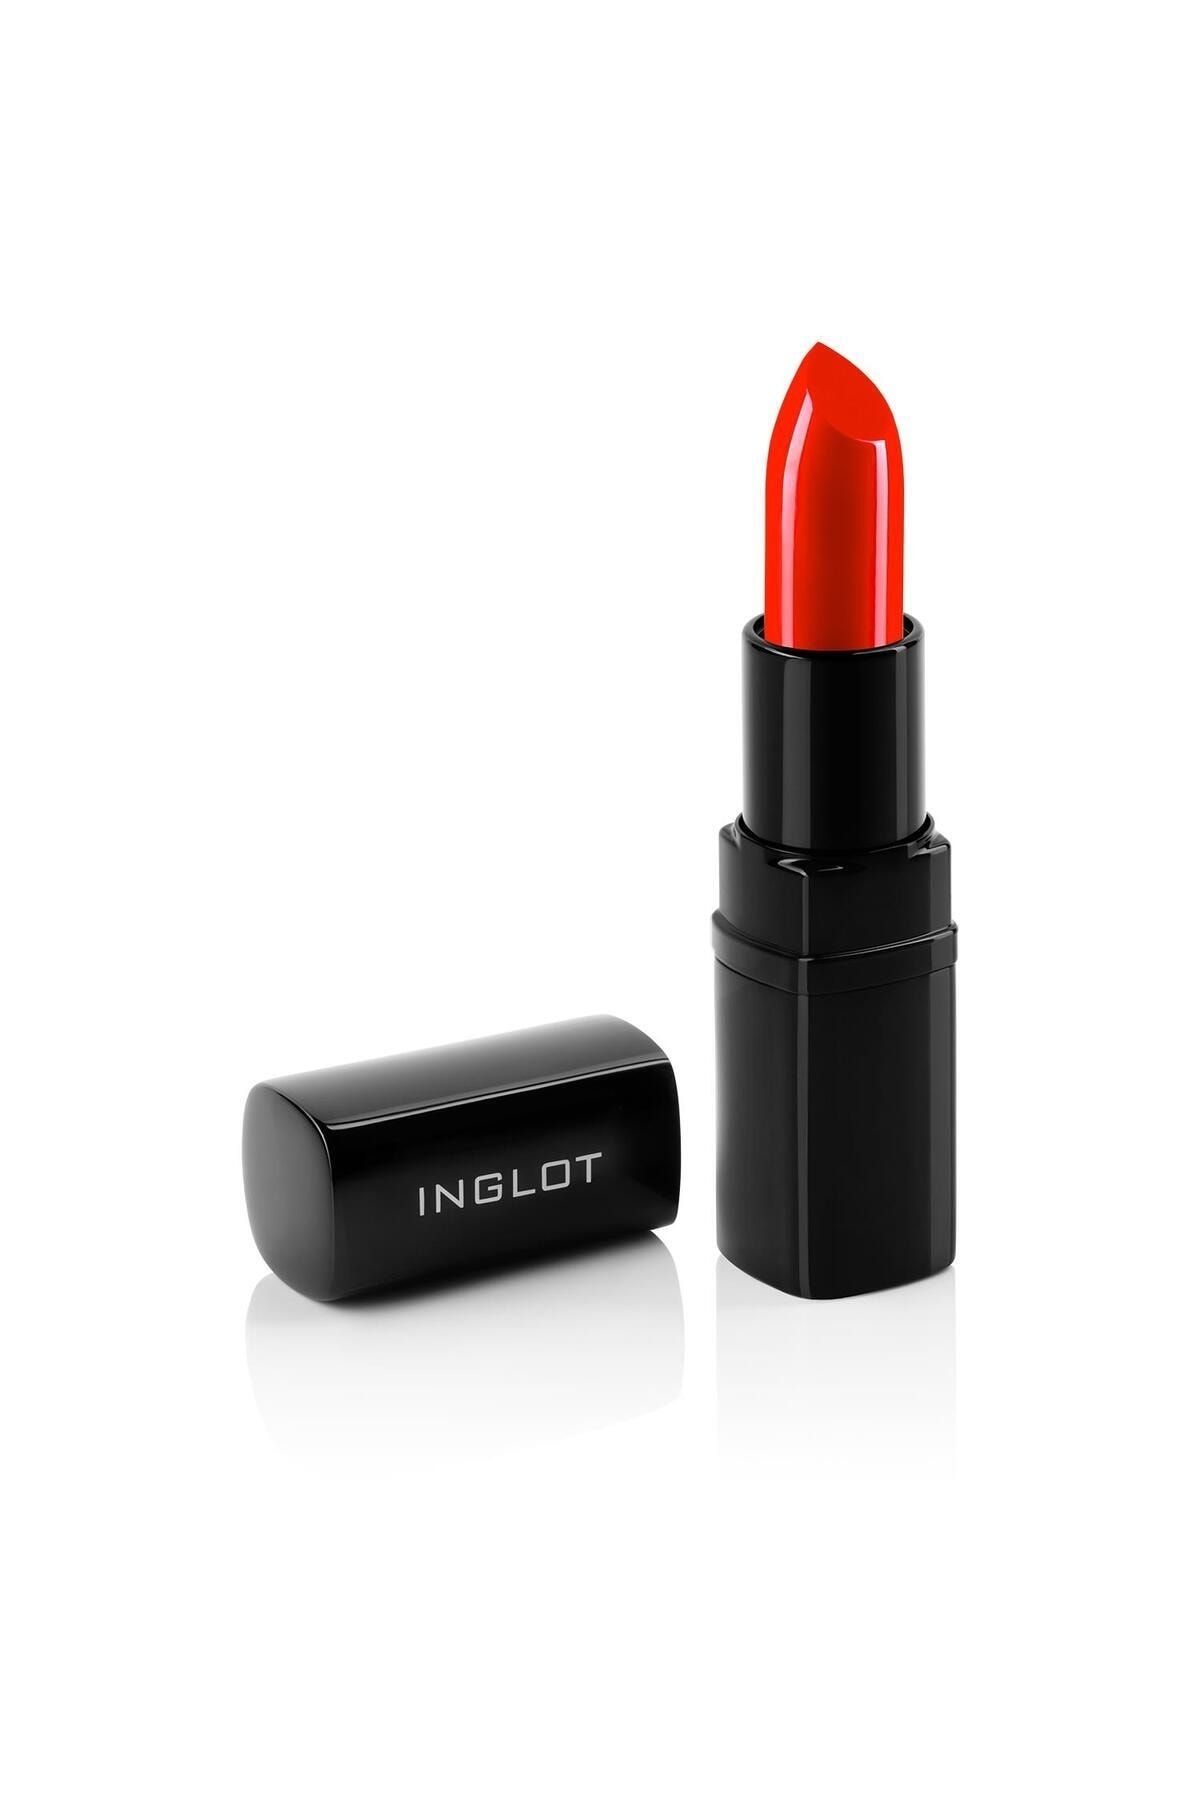 Inglot LipSatin Lipstick